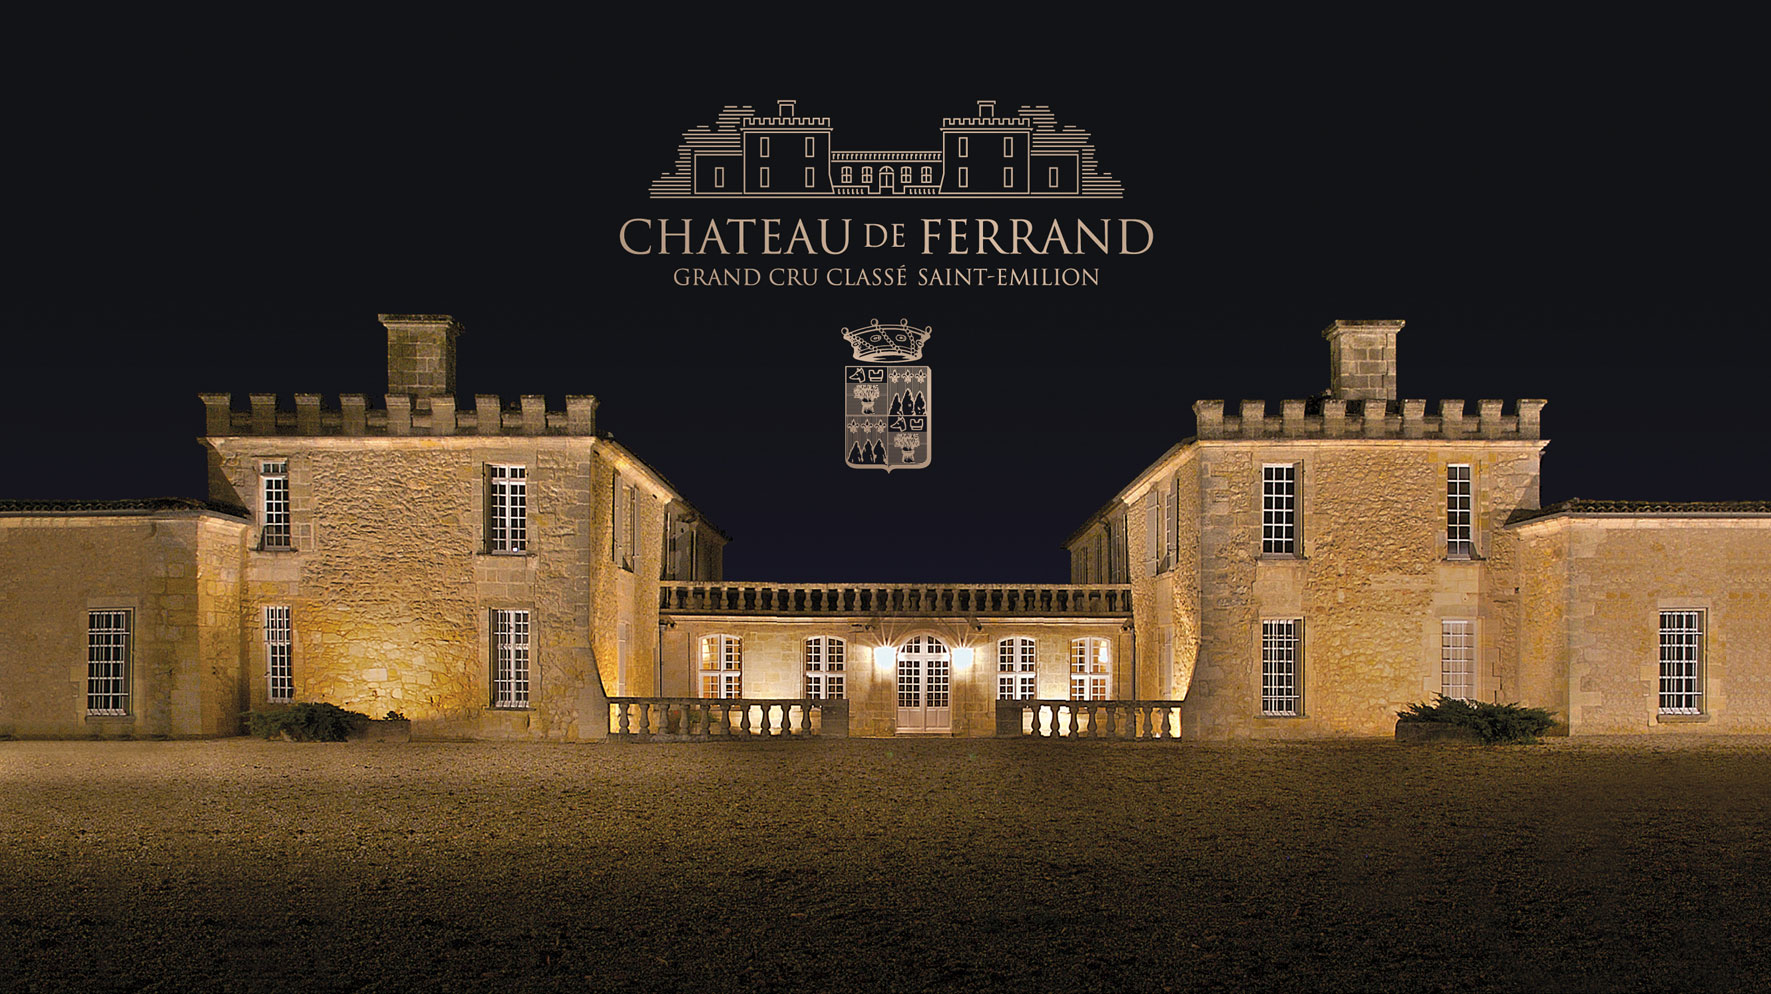 Chateau de Ferrand